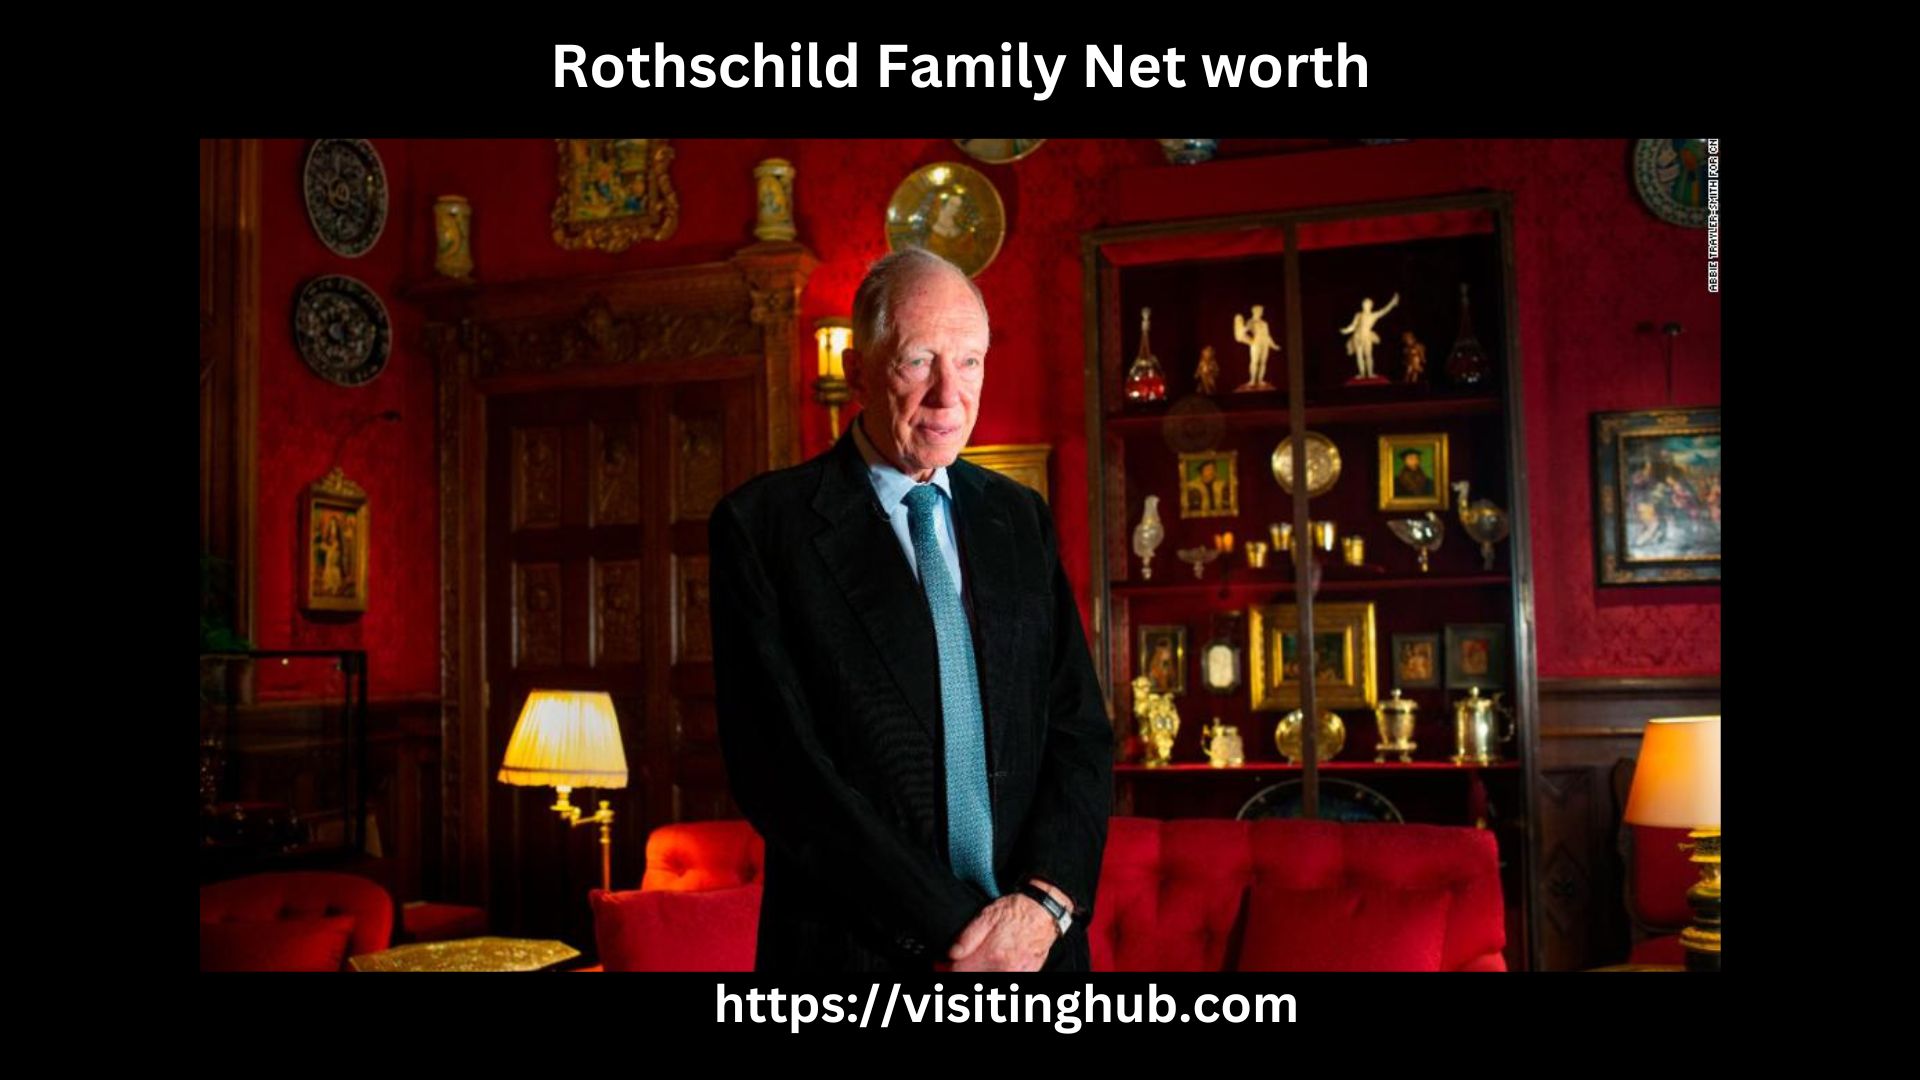 Rothschild Family Net worth $500 trillion